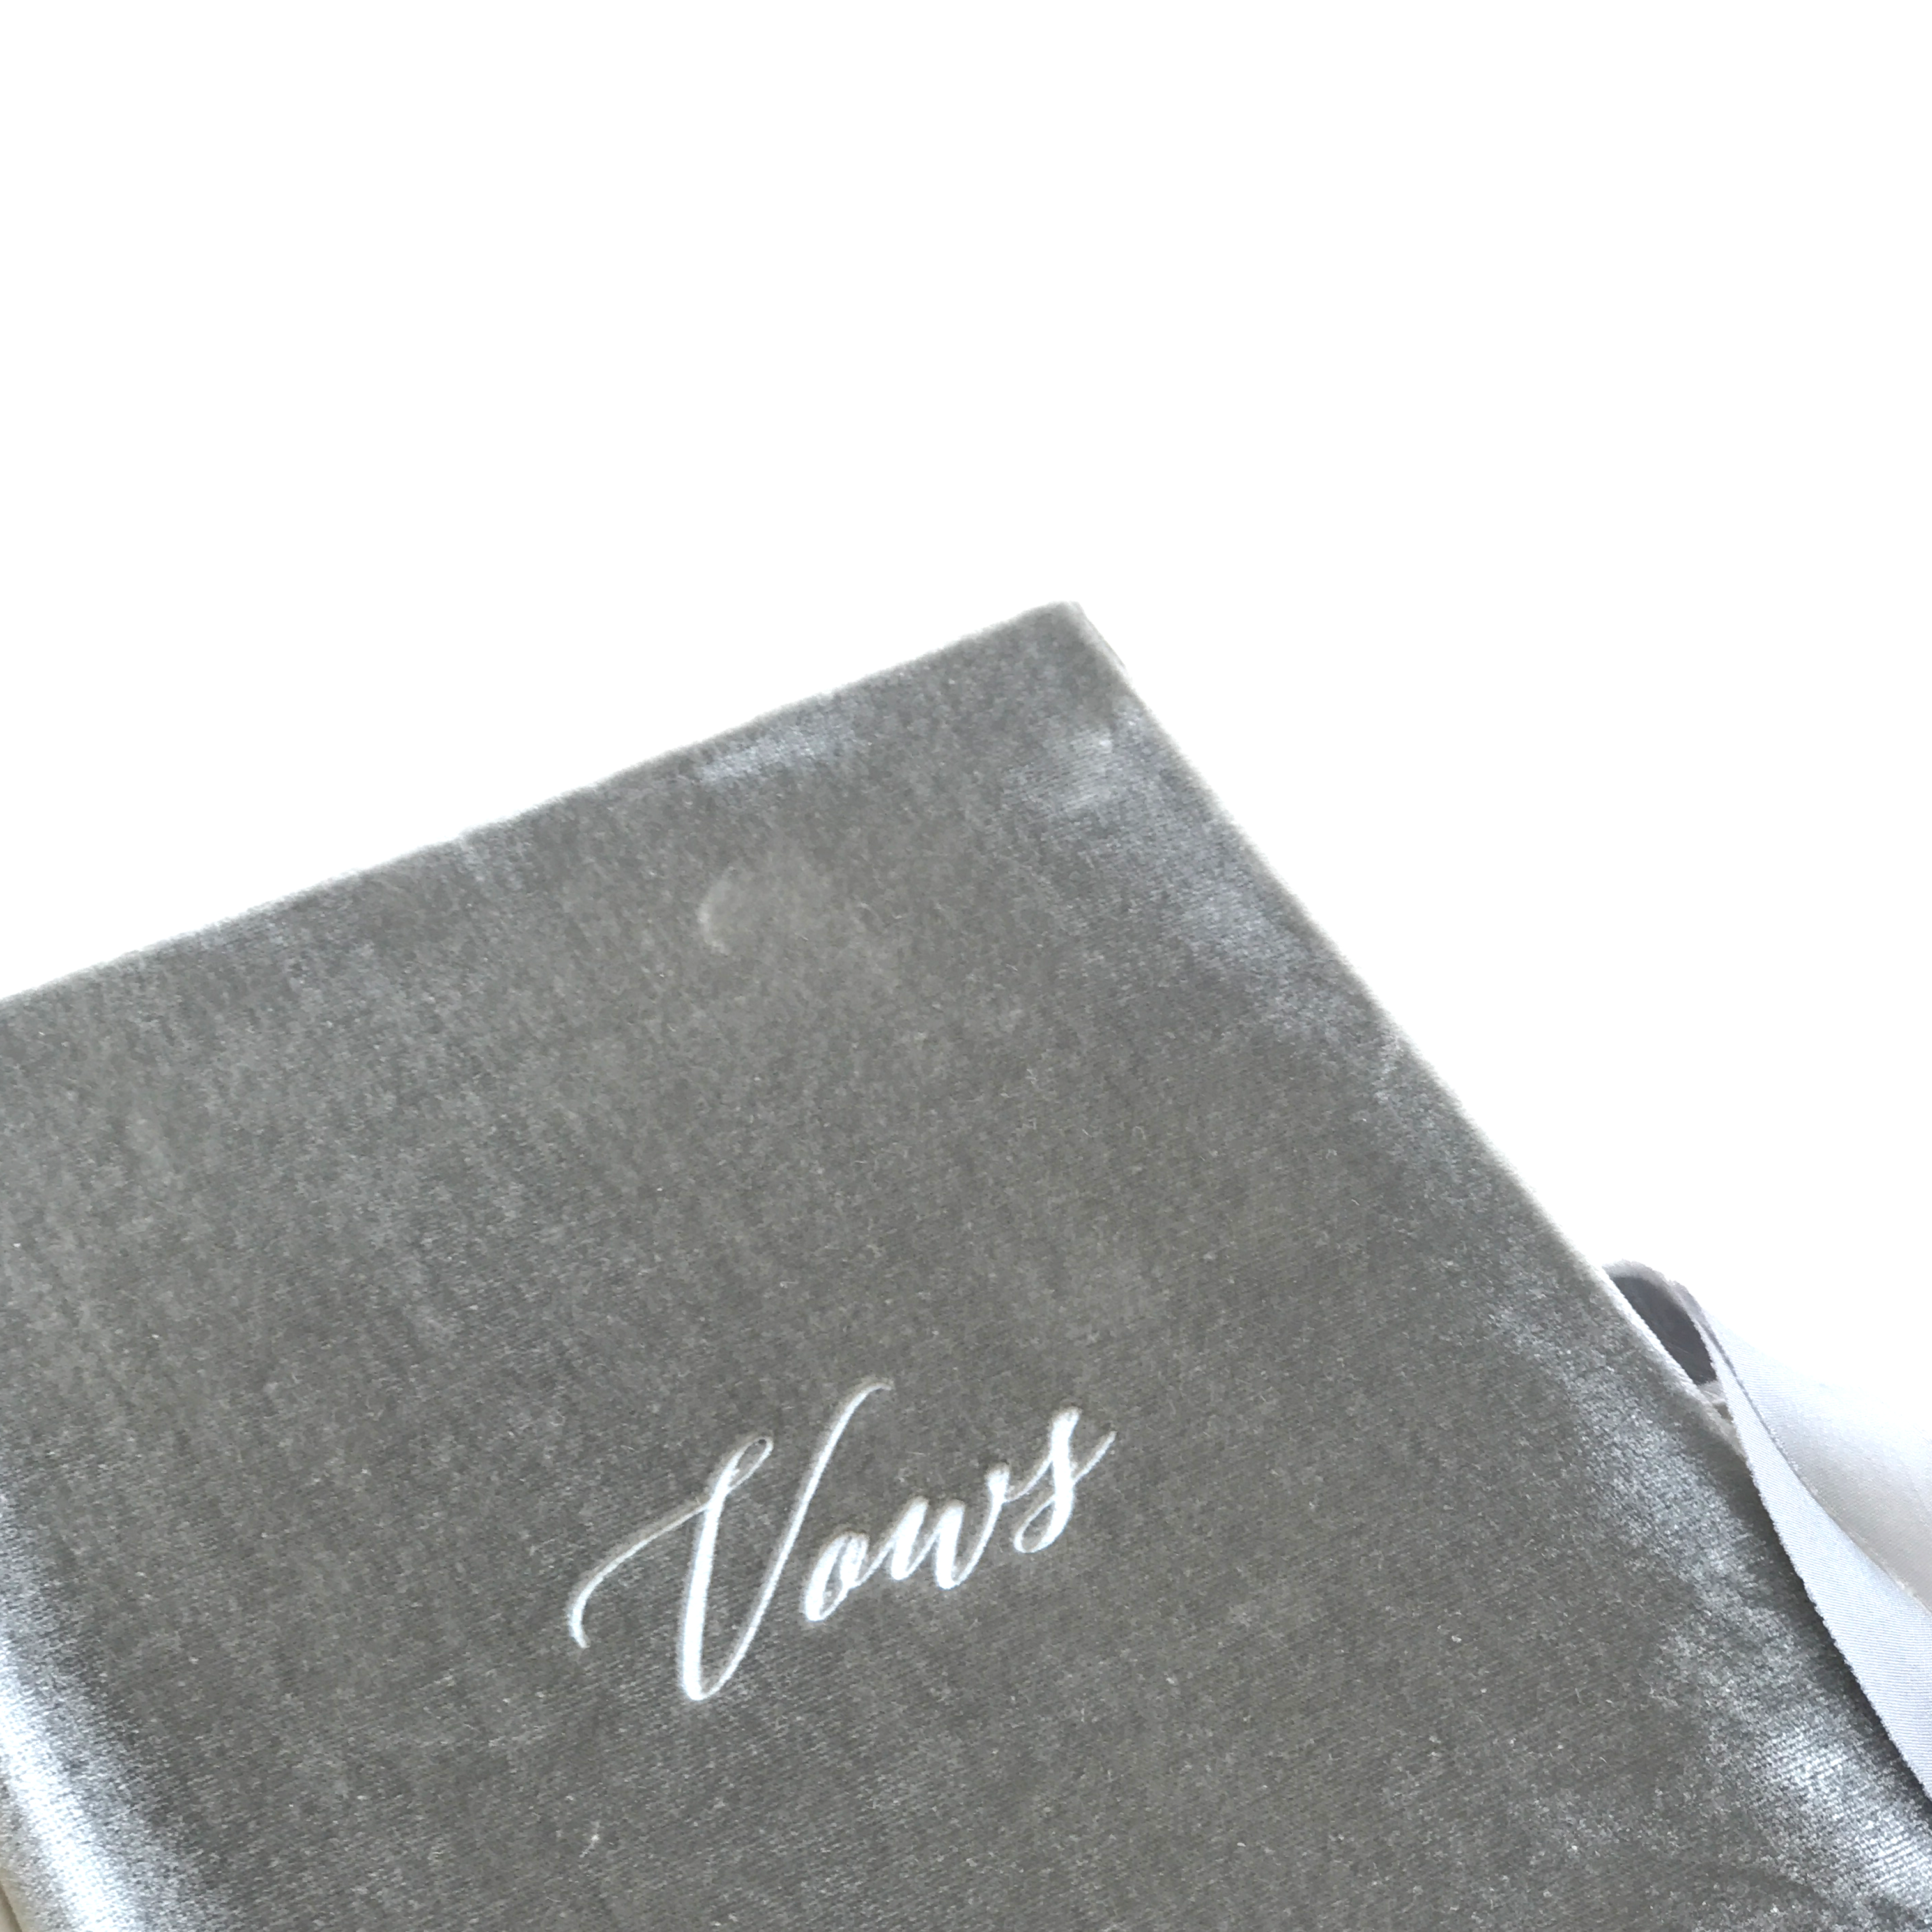 Vow Book Covers Uk Velvet - Light Grey Wedding Stationery wedding theme